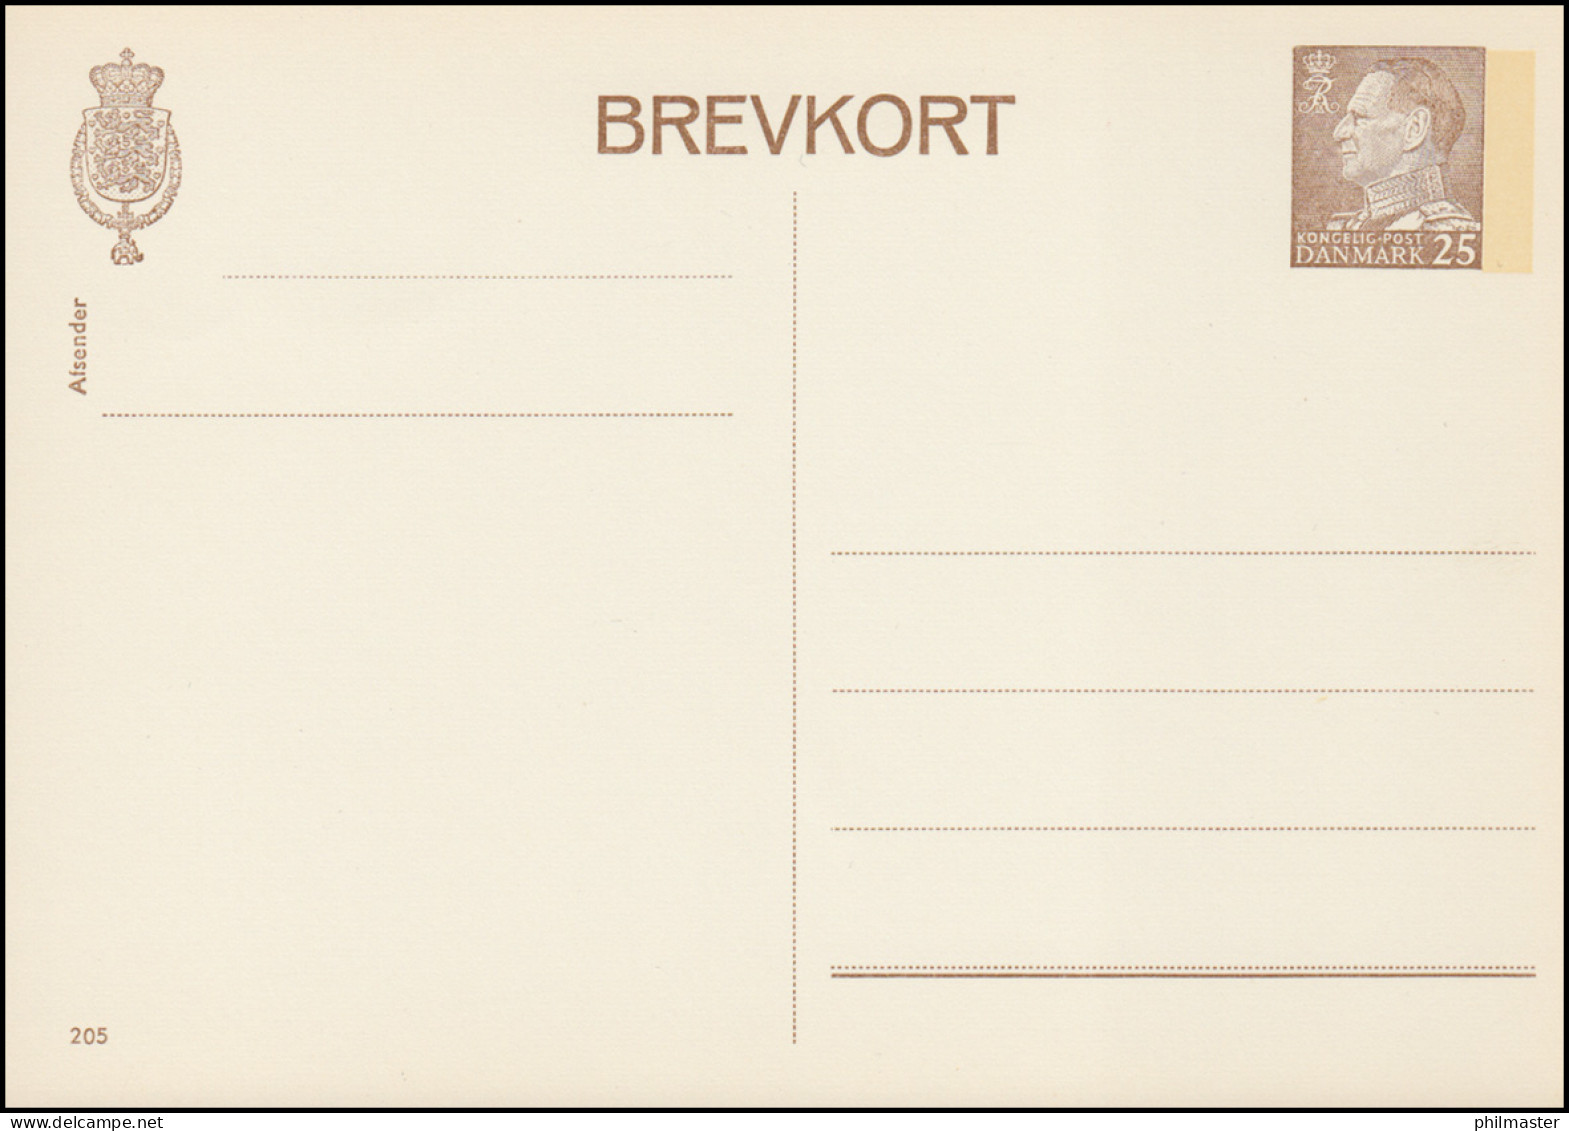 Dänemark Postkarte P 256 Frederik IX. 25 Öre, Kz. 205, ** - Ganzsachen